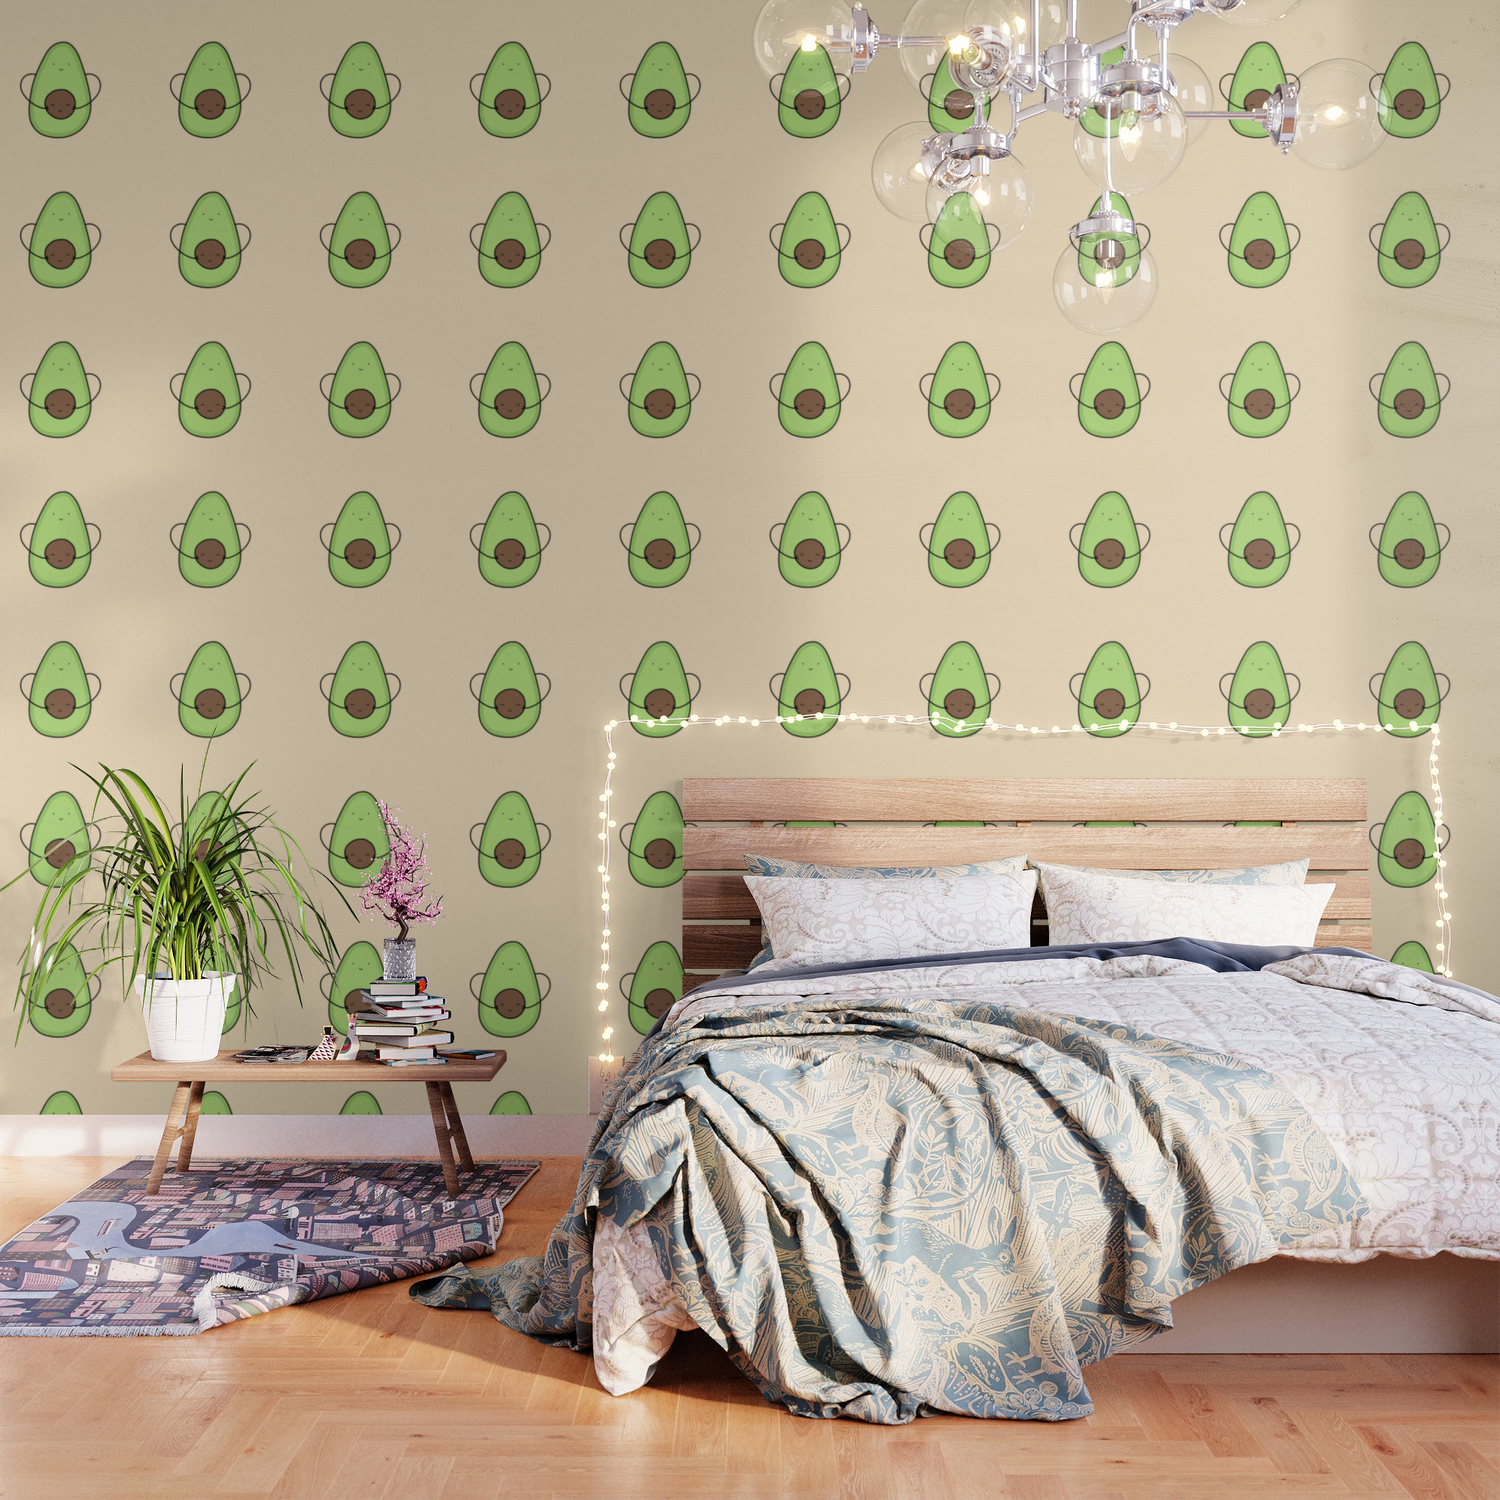 Cute Avocado Wallpapers Wallpapers